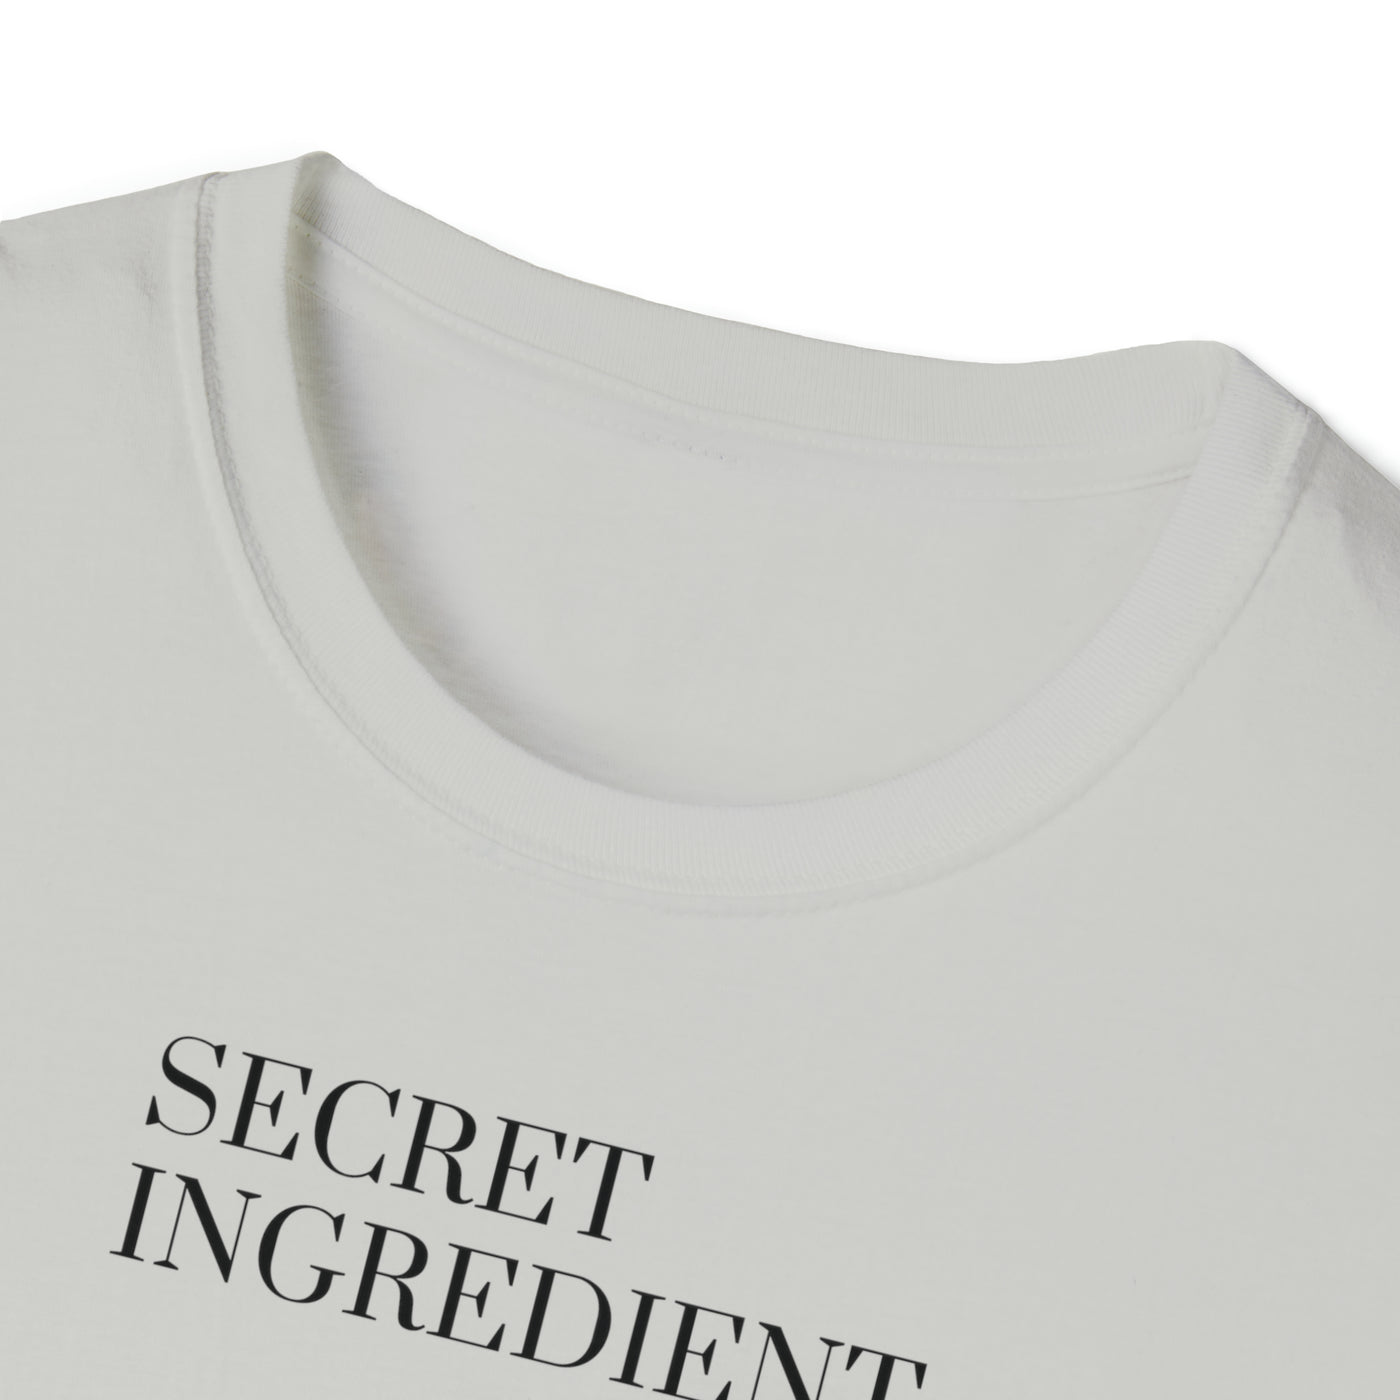 Secret Ingredient: Resentment Unisex T-Shirt